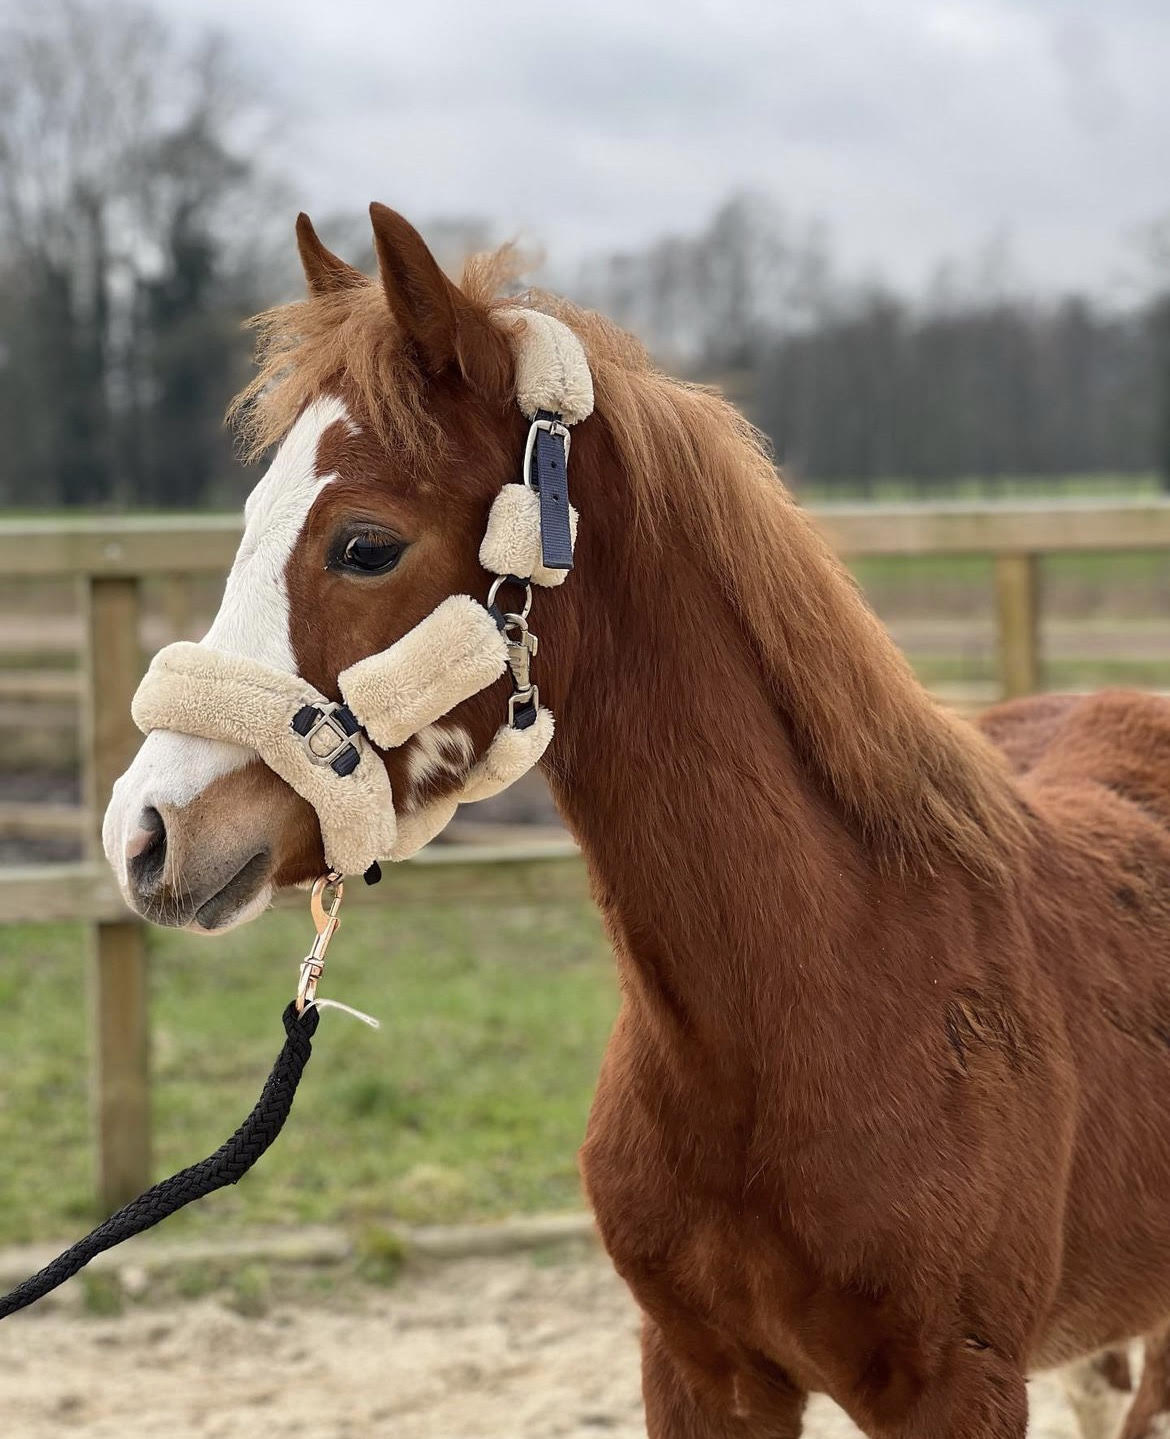 Adoptie paarden | Paard baas